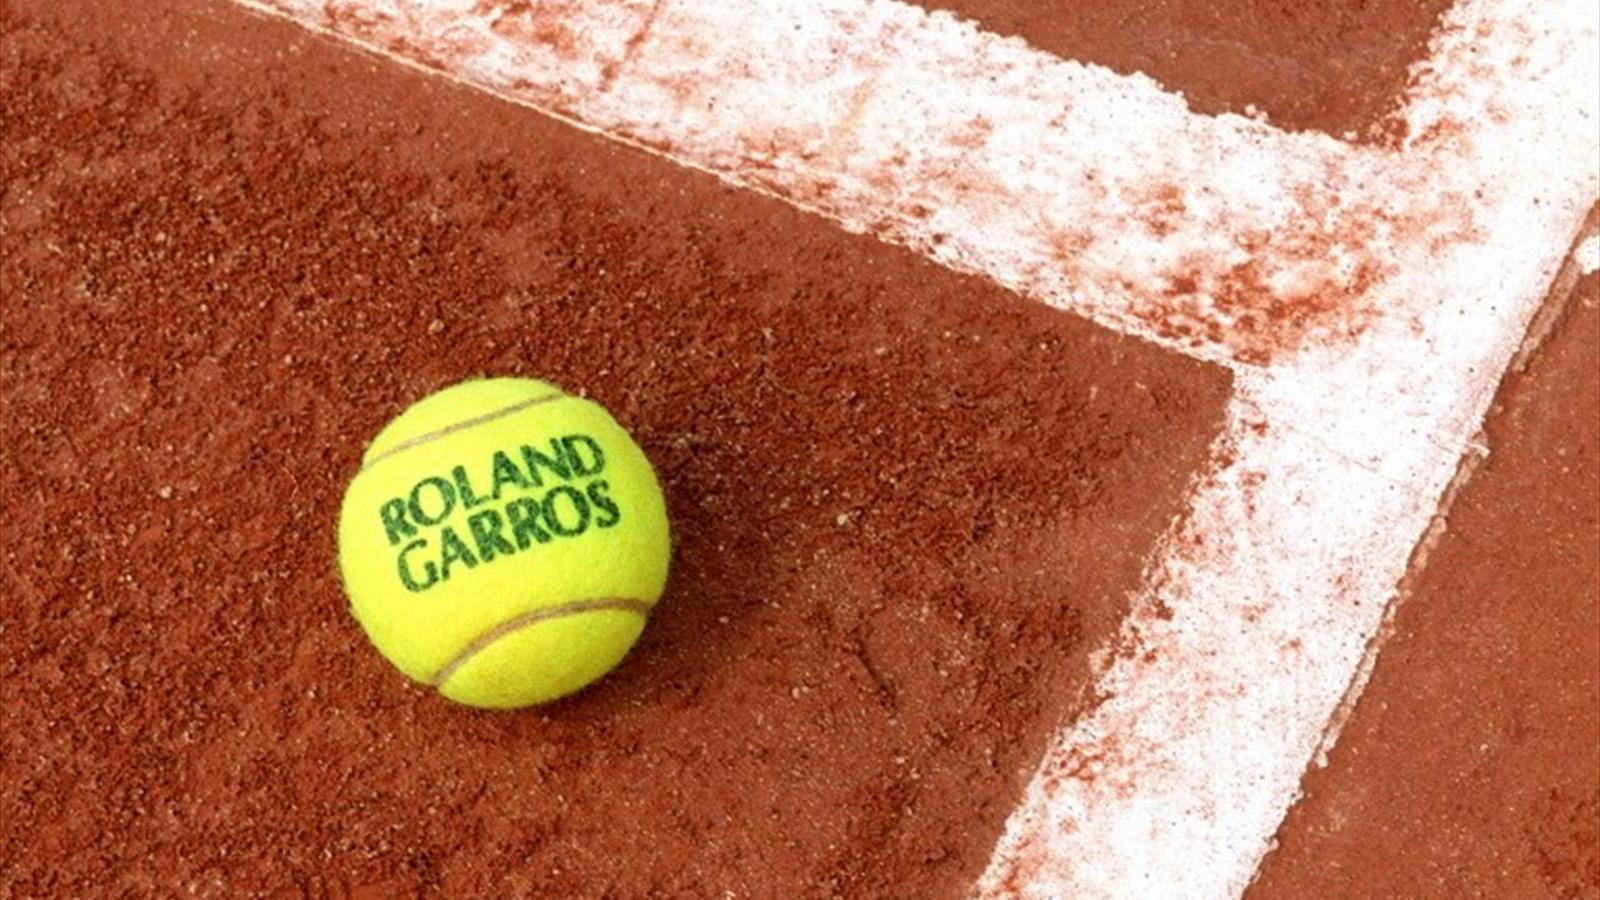 Roland Garros Wallpaper